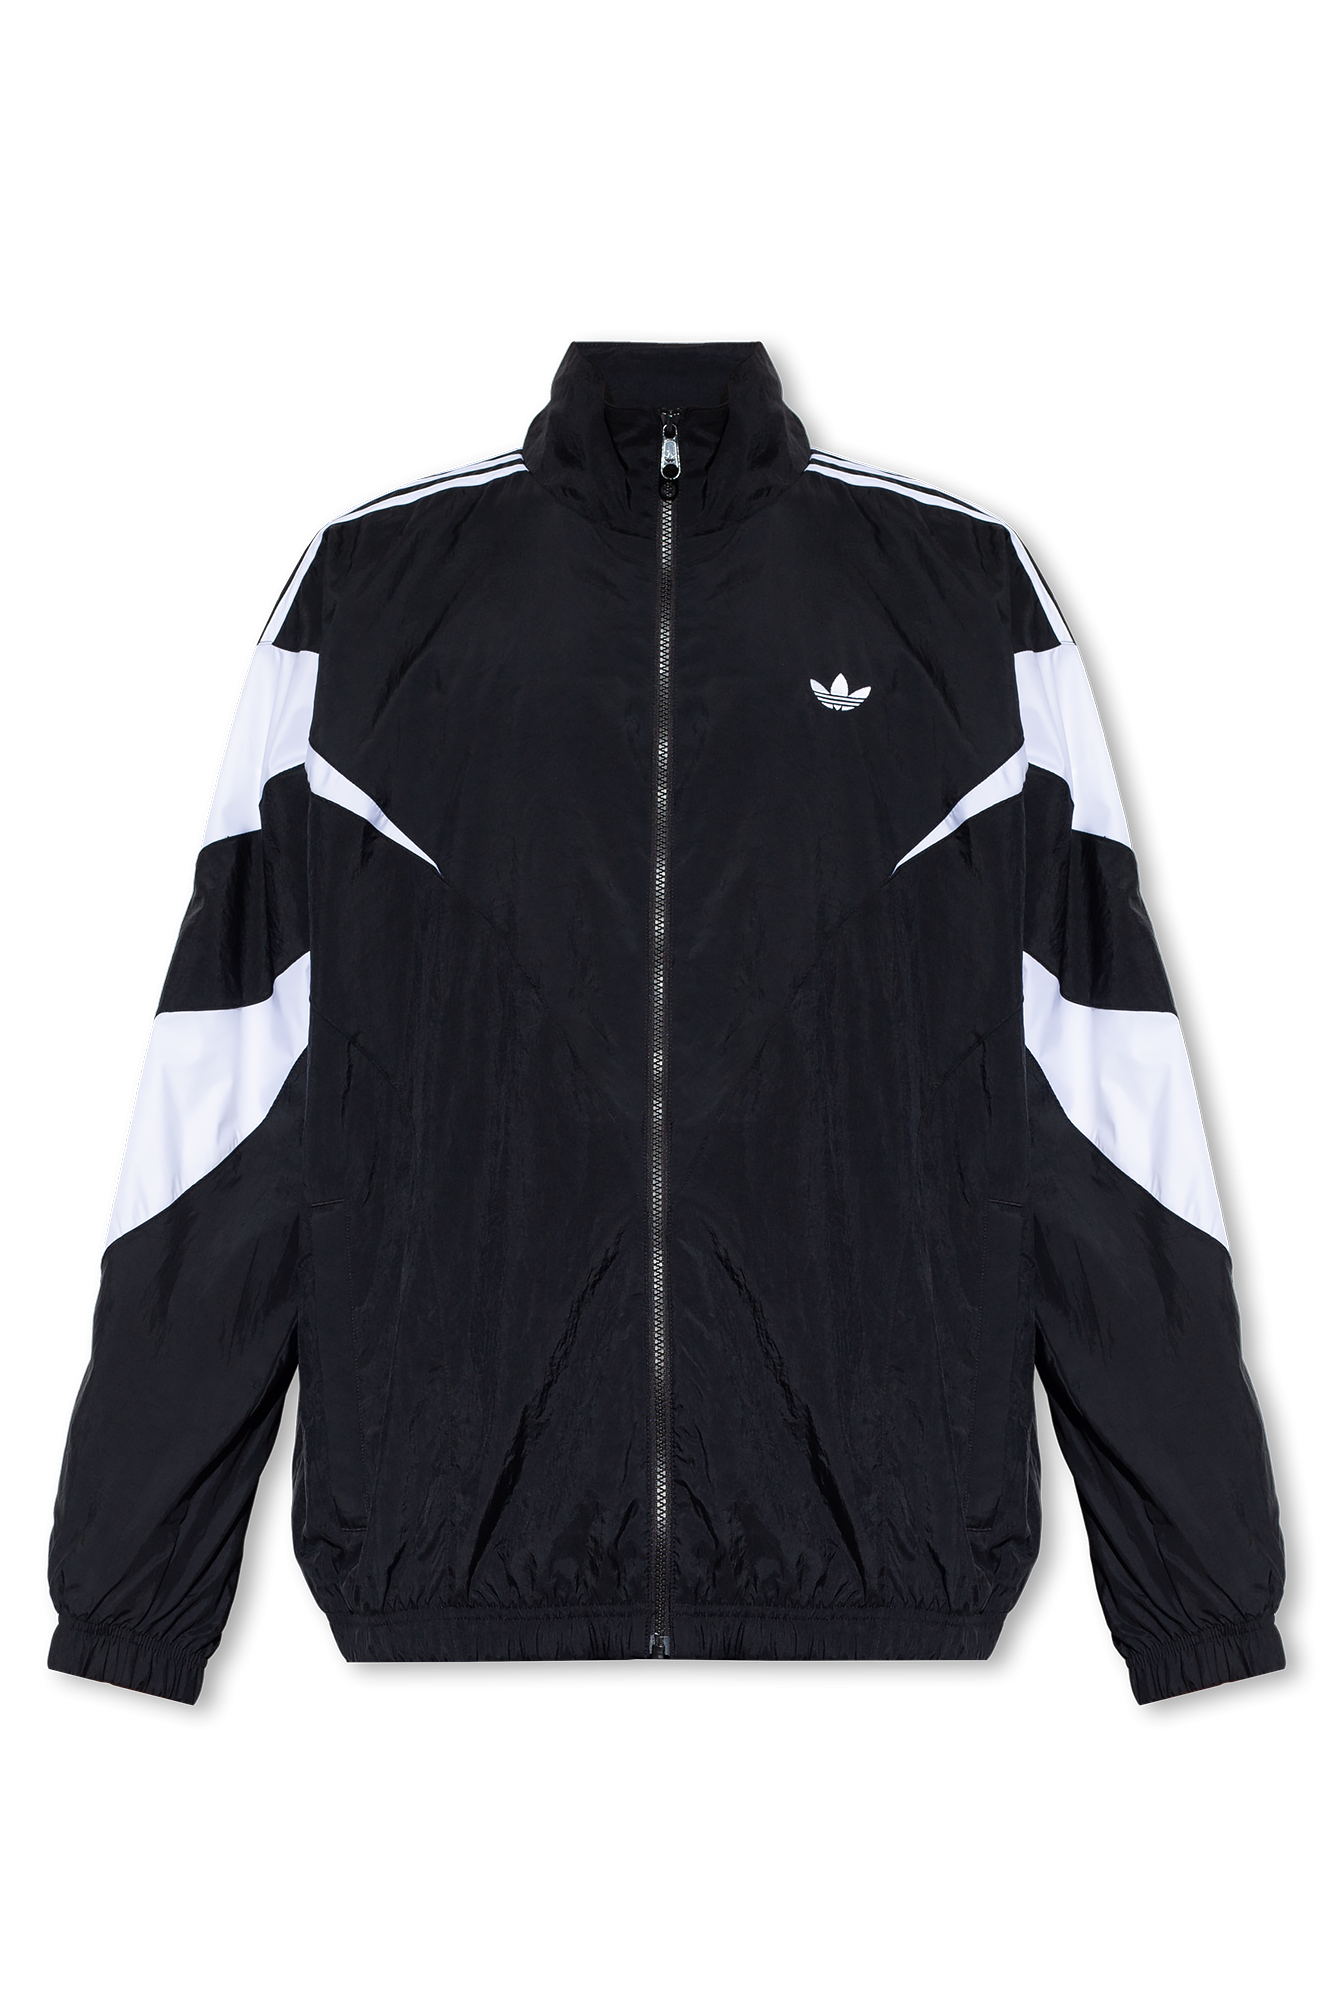 Black Track jacket with logo ADIDAS Originals - Vitkac Italy